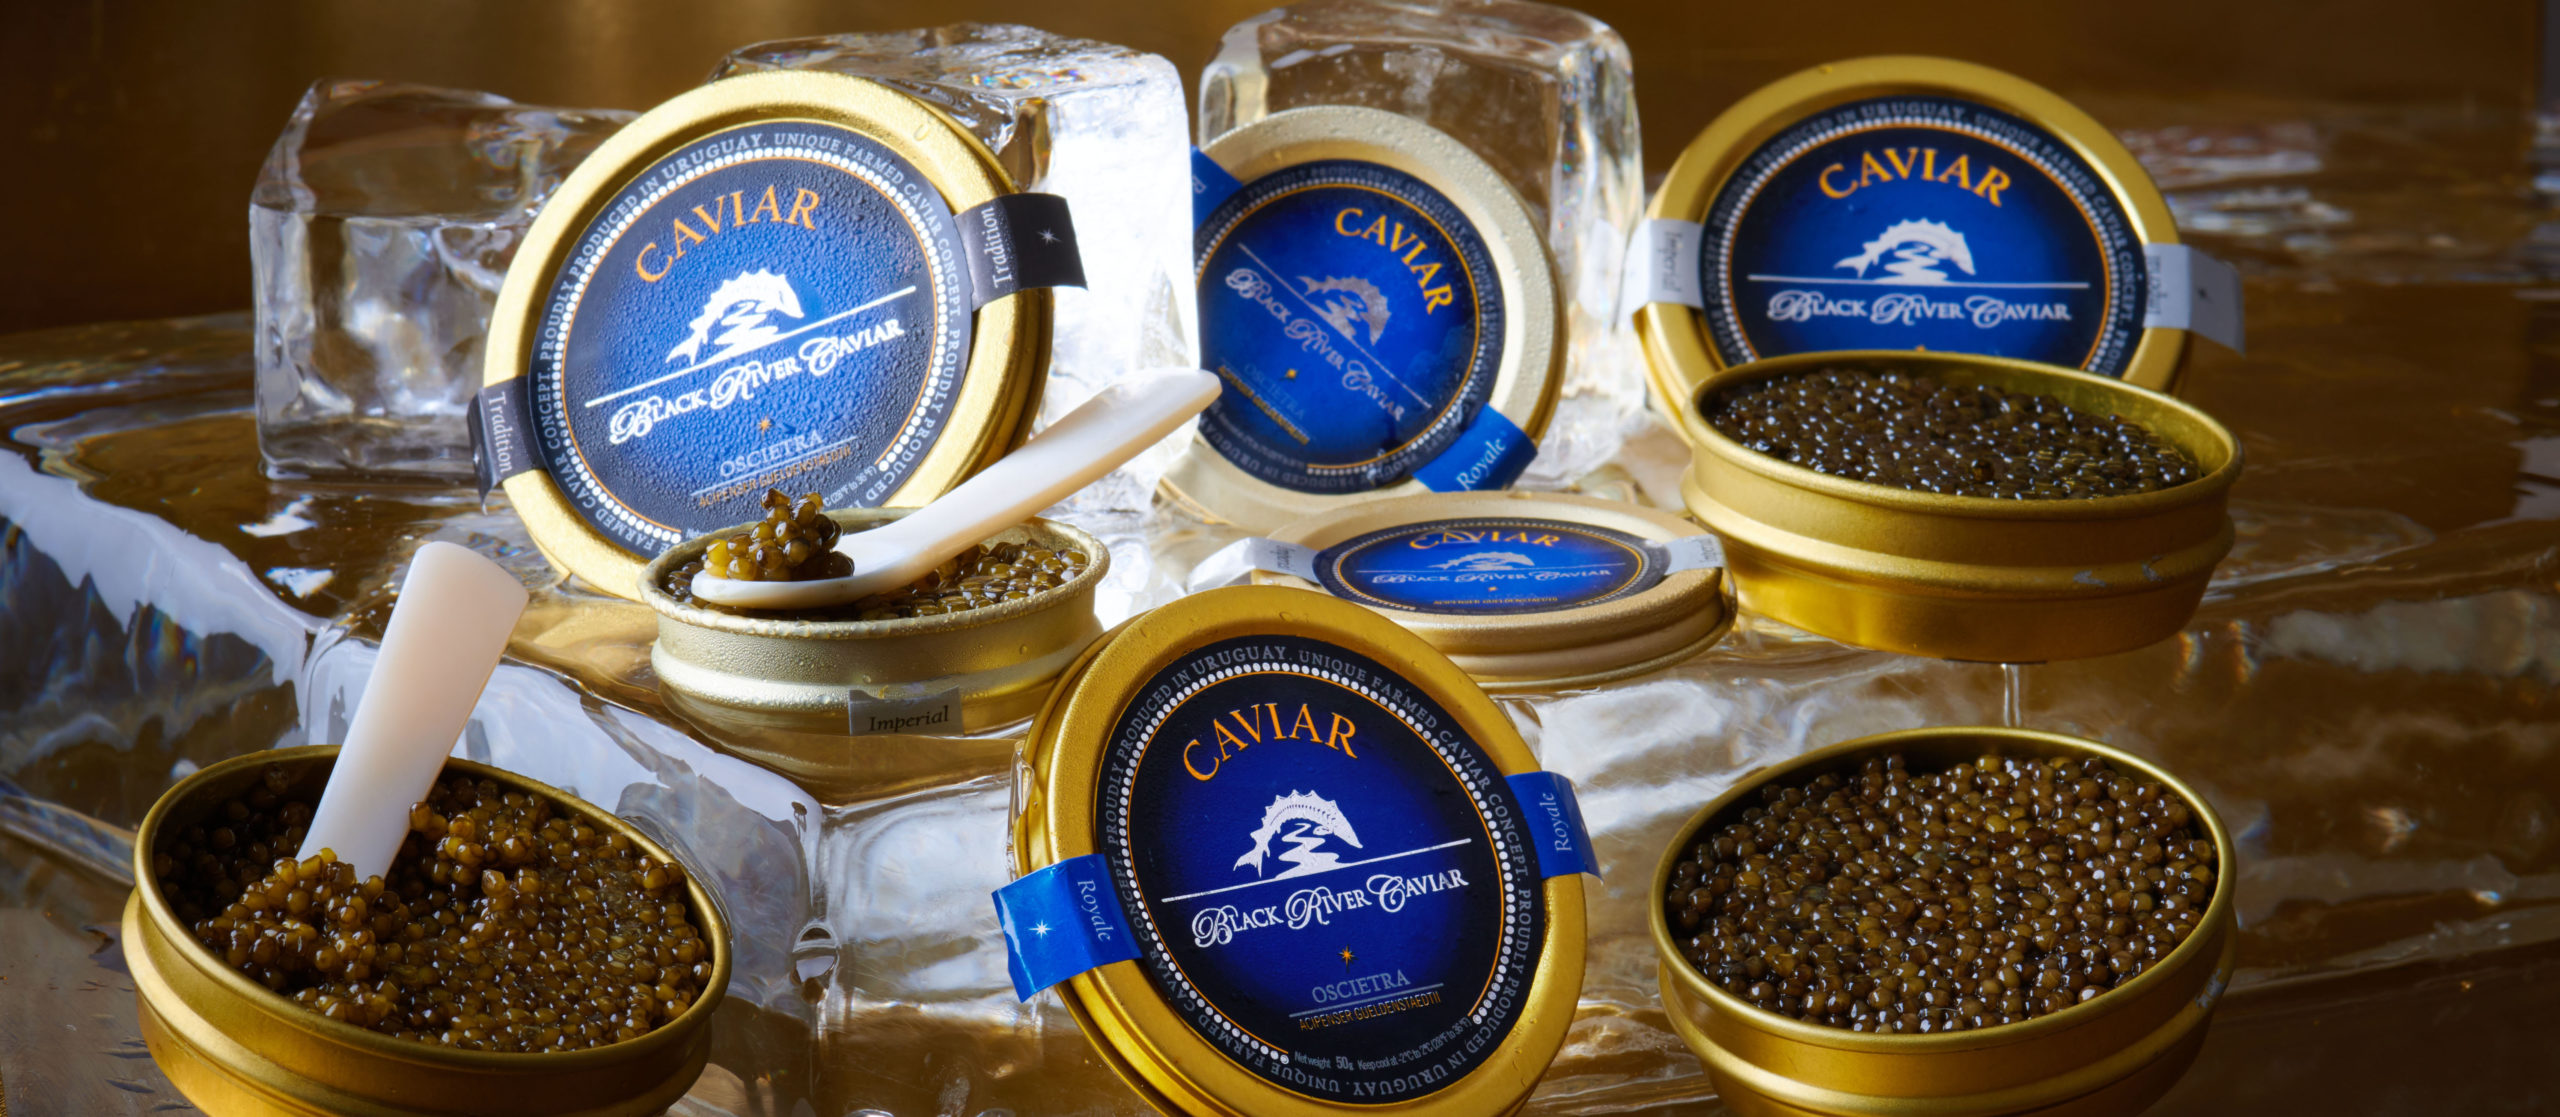 tins of Black River Caviar